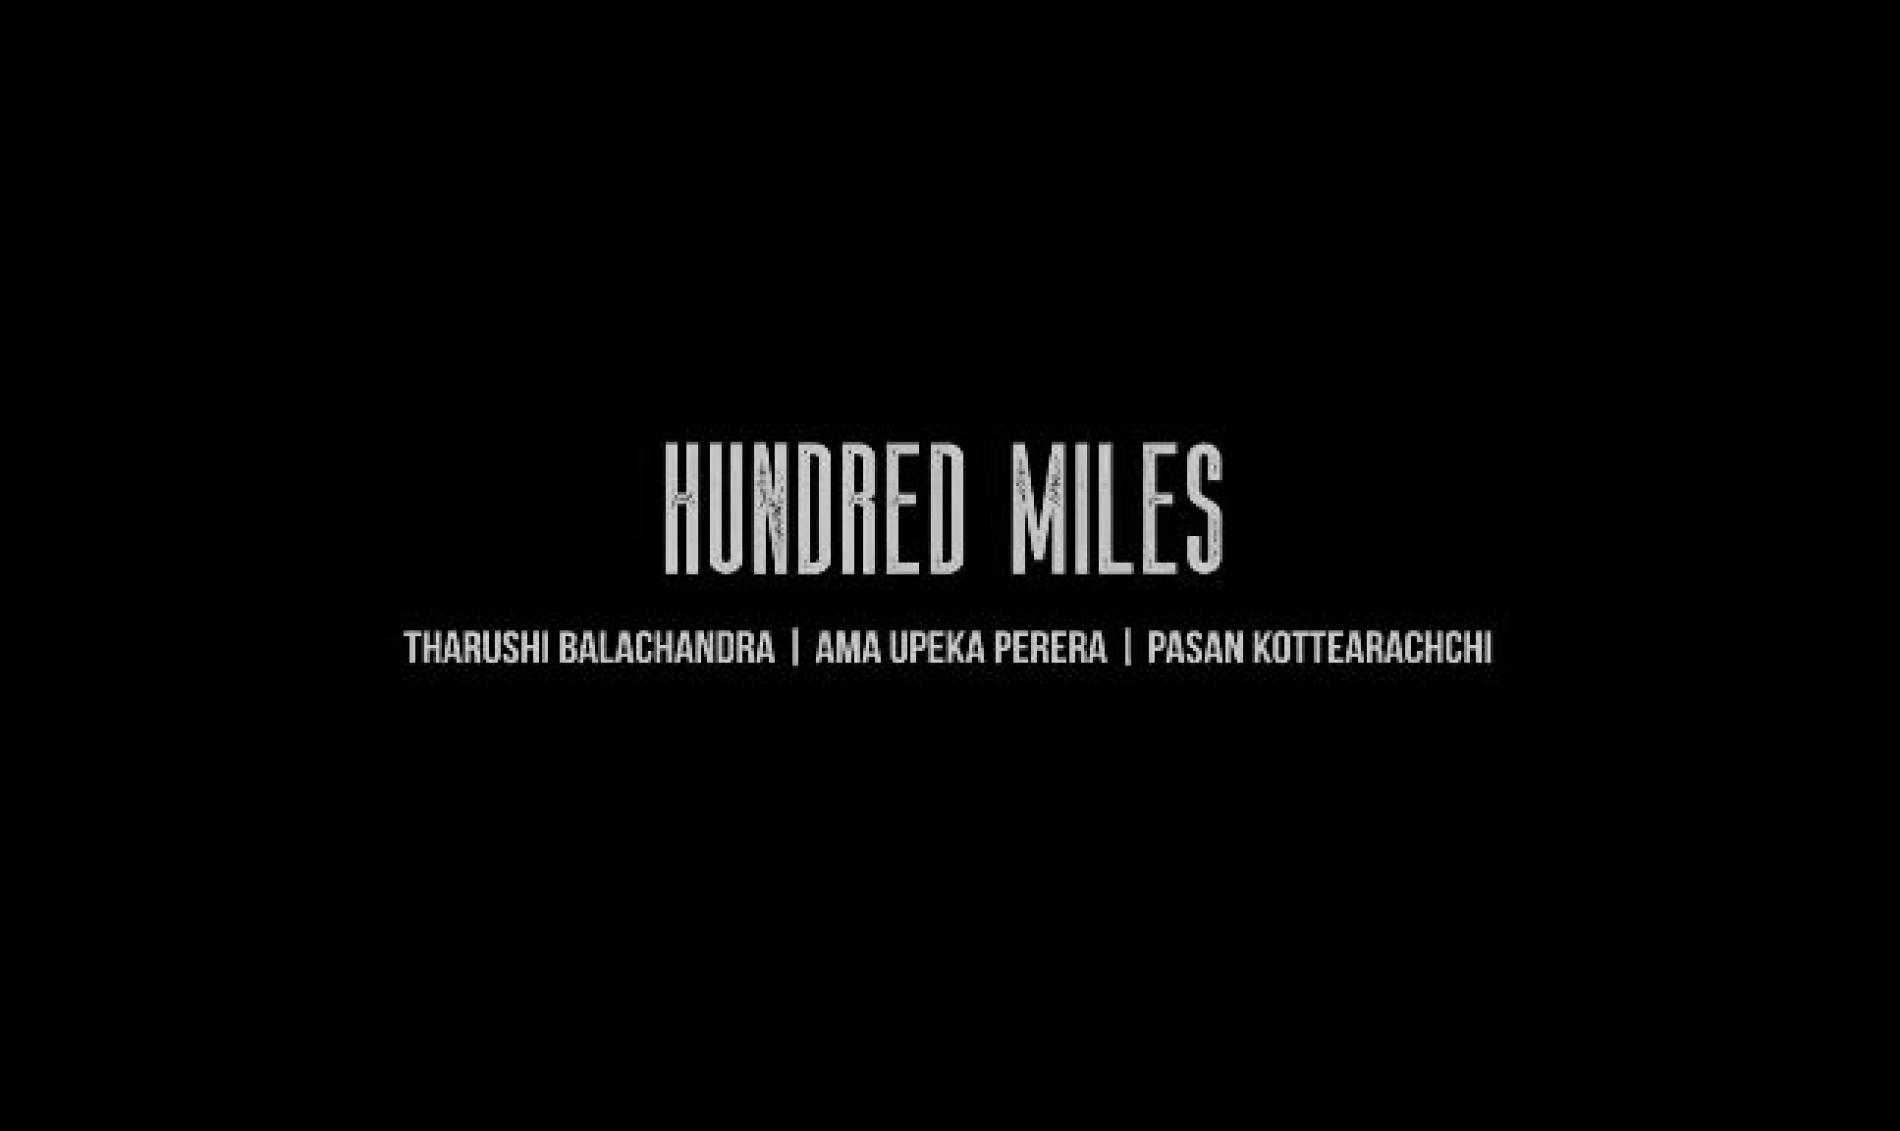 New Music : Hundred Miles – Tharushi Balachandra | Ama Upeka Perera | Pasan Kottearachchi (Animated Lyric Video)